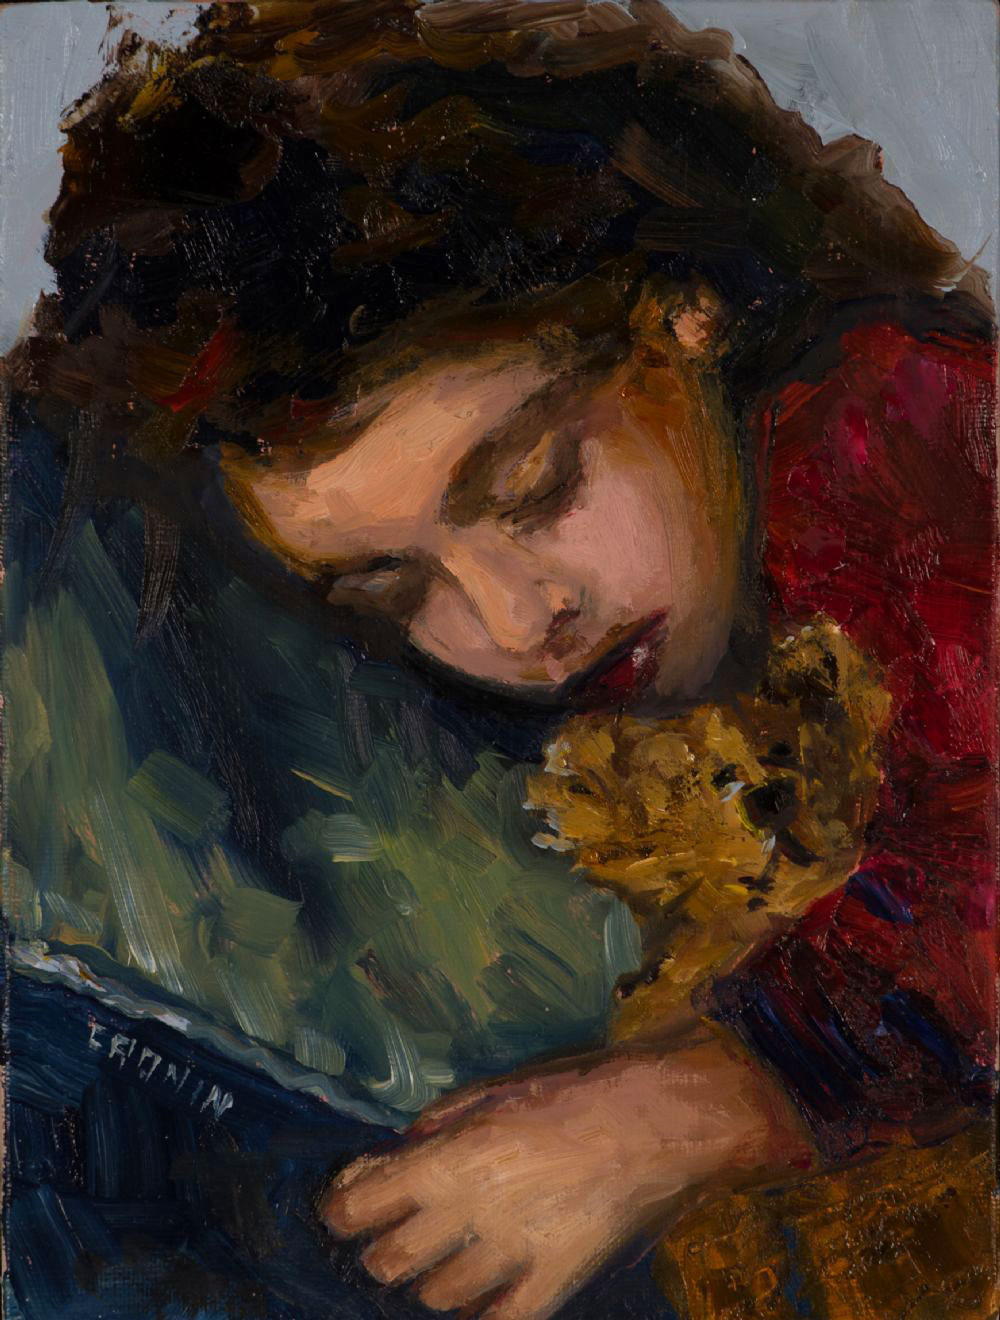 SLEEP TIGHT by Susan Cronin  at Dolan's Art Auction House